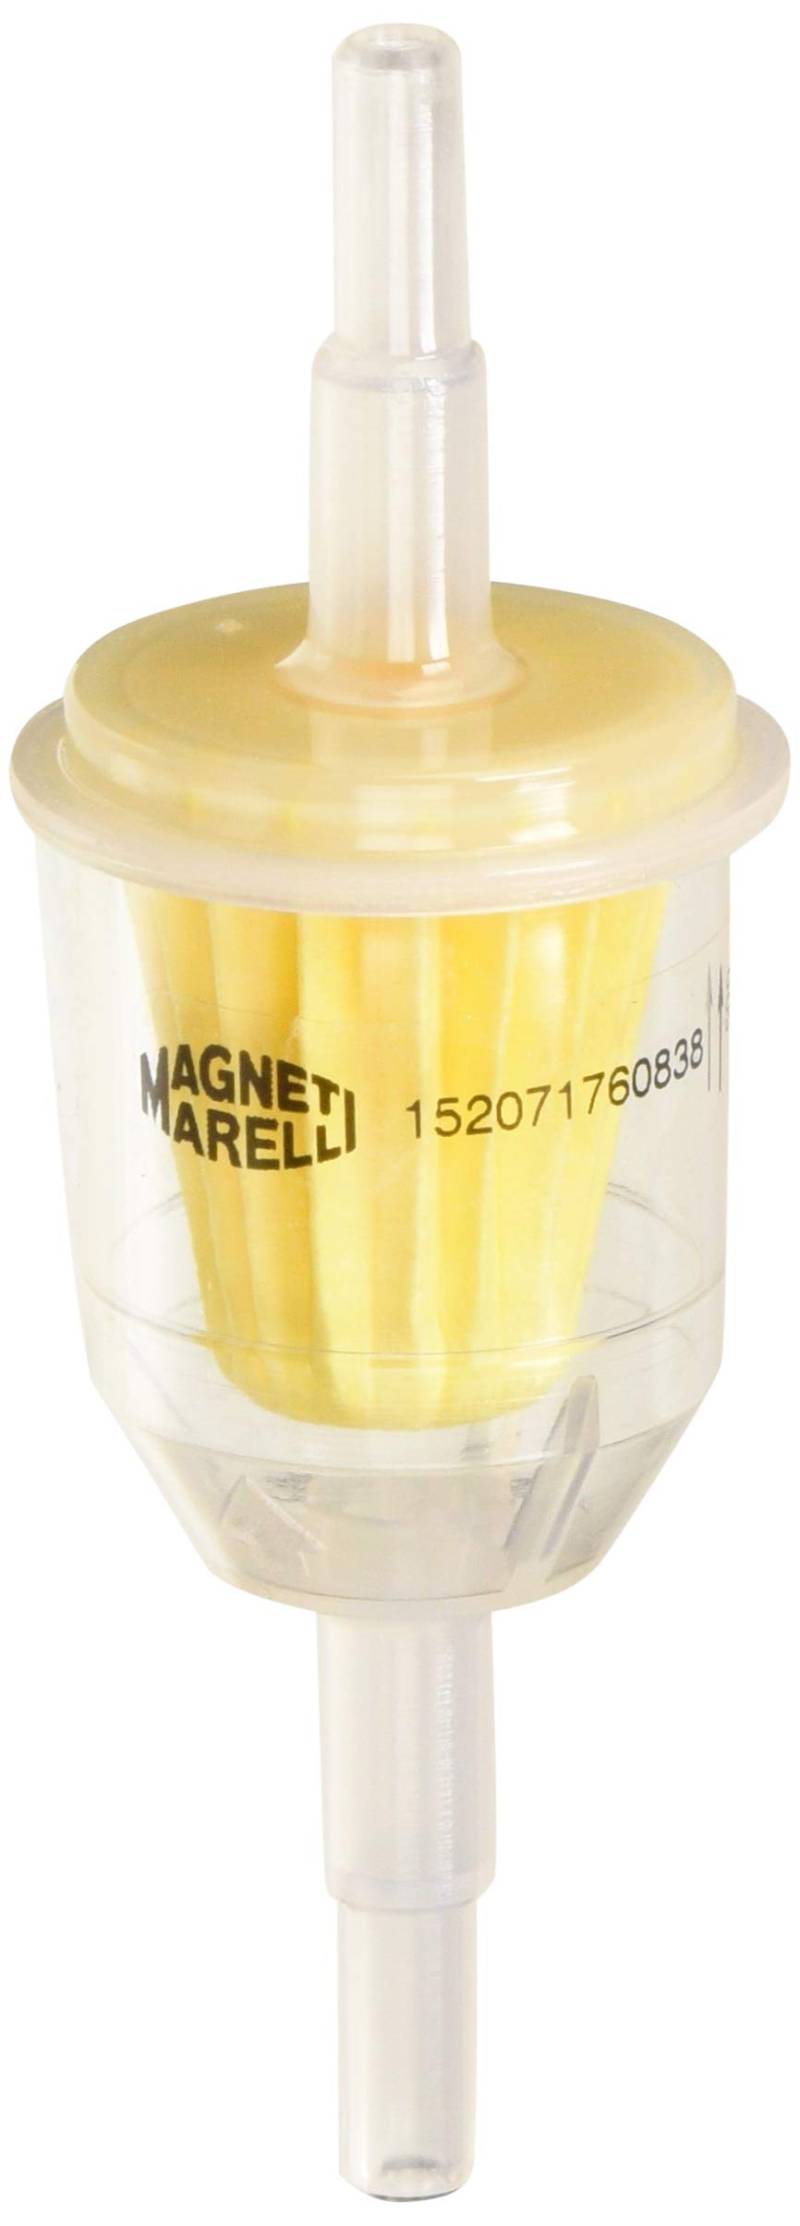 Magneti Marelli 152071760838 Kraftstofffilter von Magneti Marelli